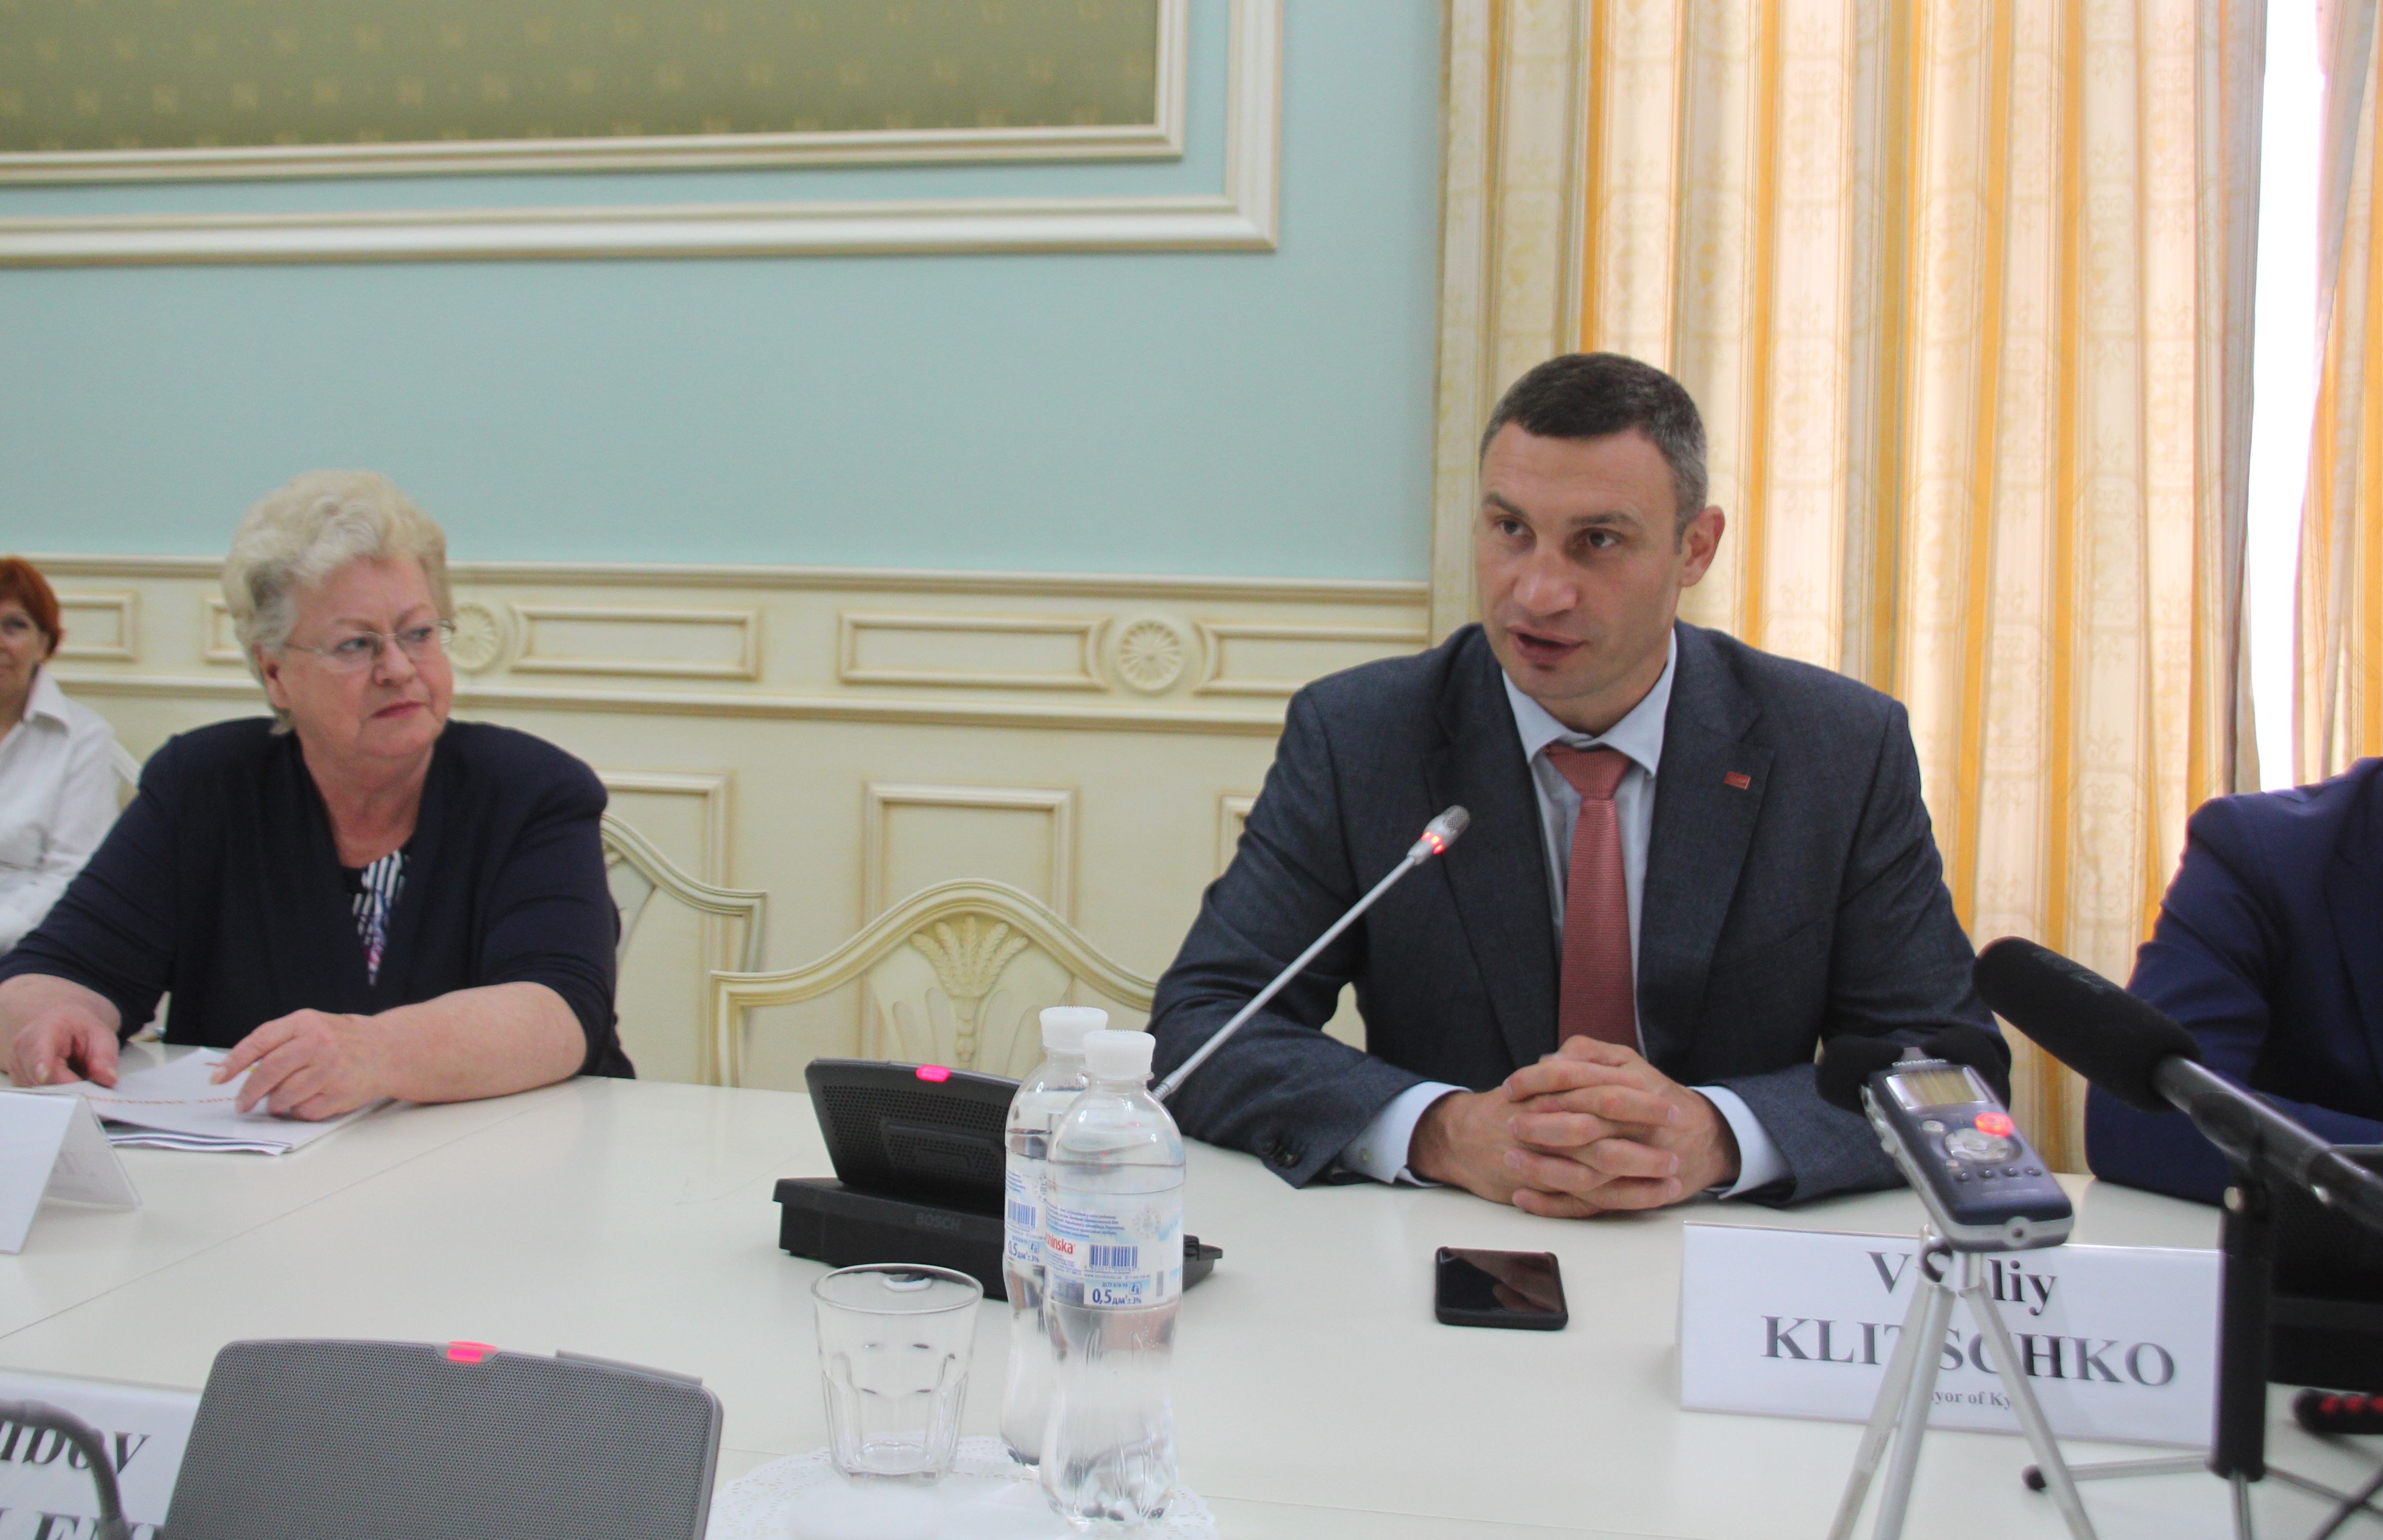 Interview mit dem Kiewer Oberbürgermeister Vitali Klitschko